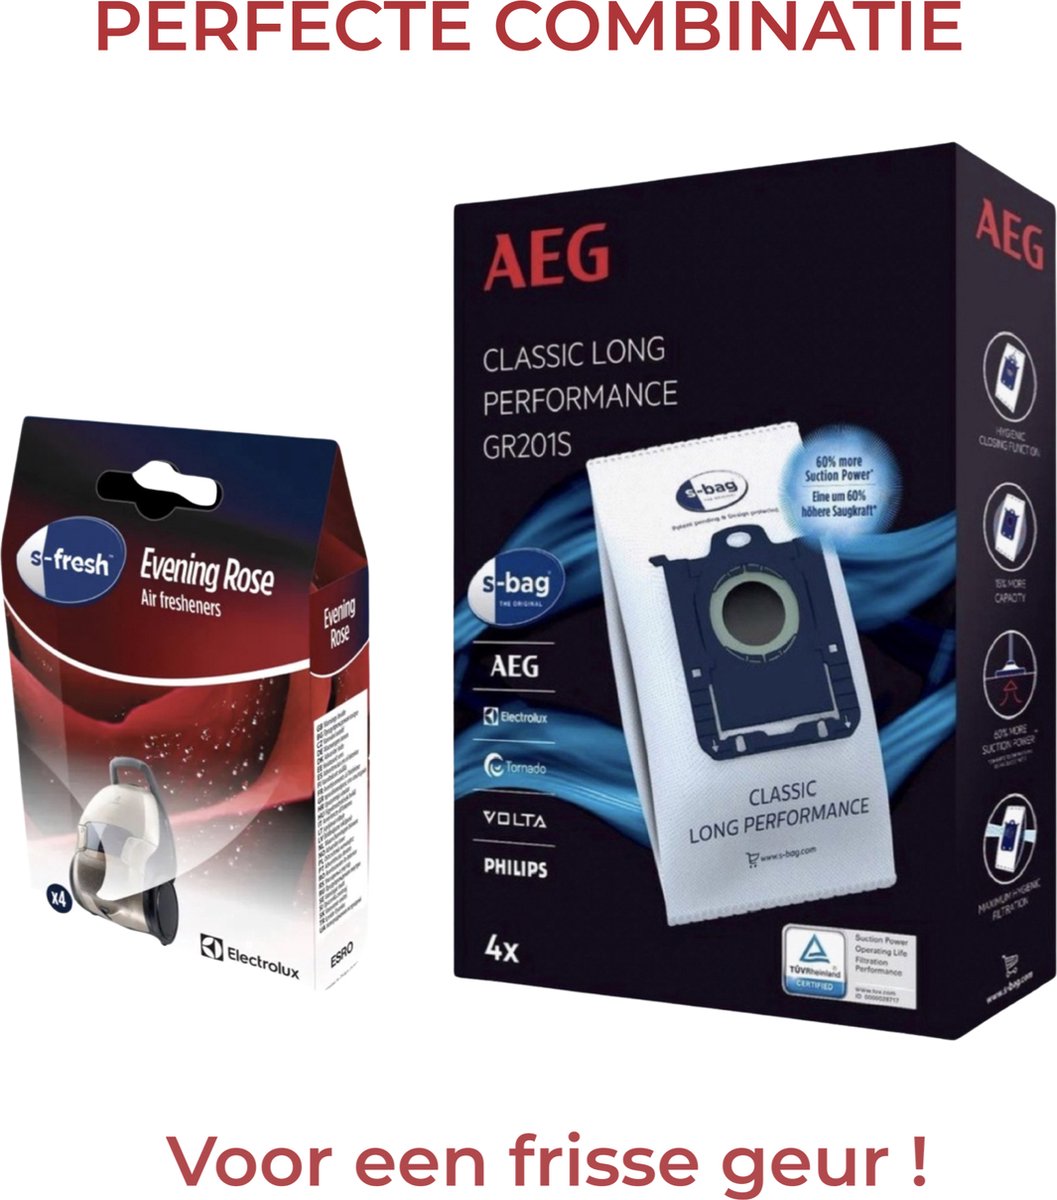 AEG - S-BAG stofzuigerzakken + S-FRESH Geurkorrels (evening rose) - Air fresheners - Geurparels - Voor Stofzuigers - COMBIDEAL